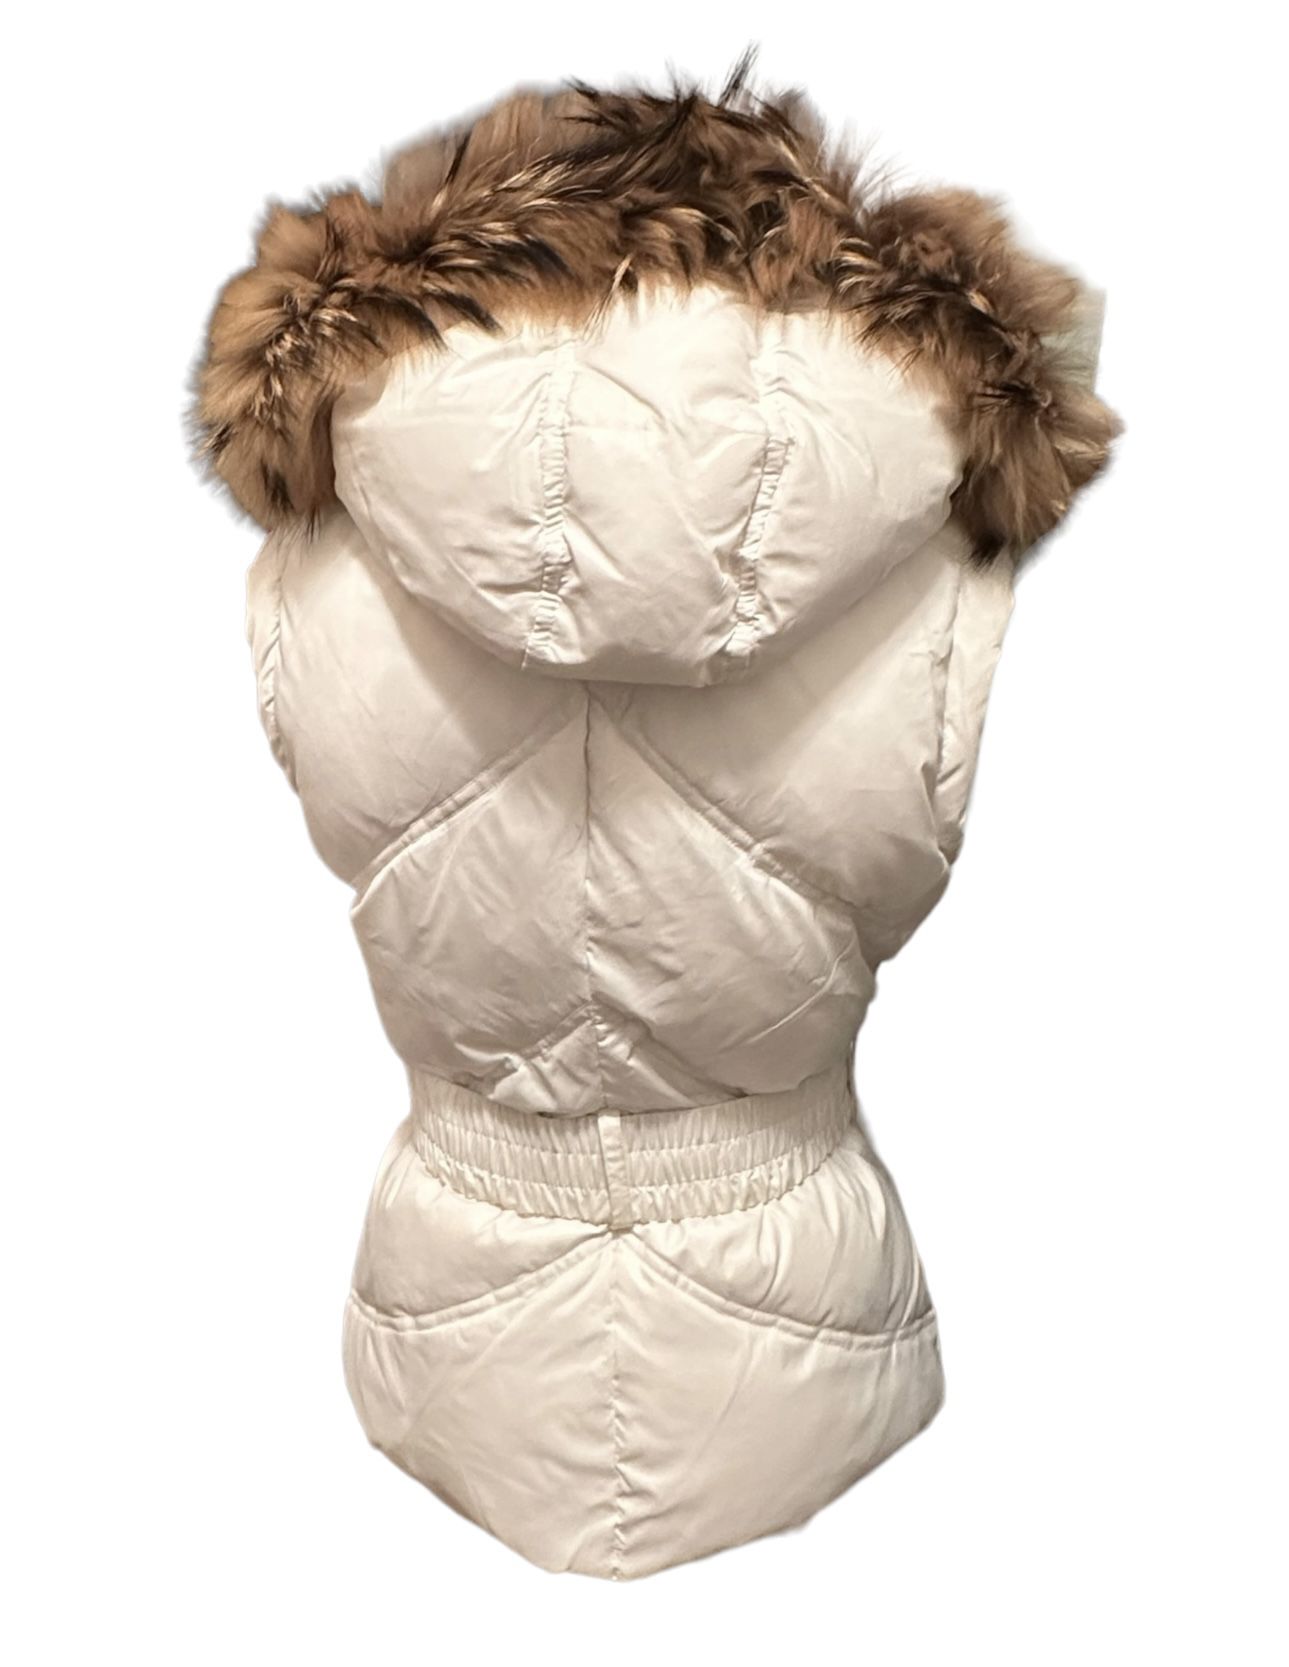 Mayo Chix Down Puffer Vest With Fur Hood. Medium